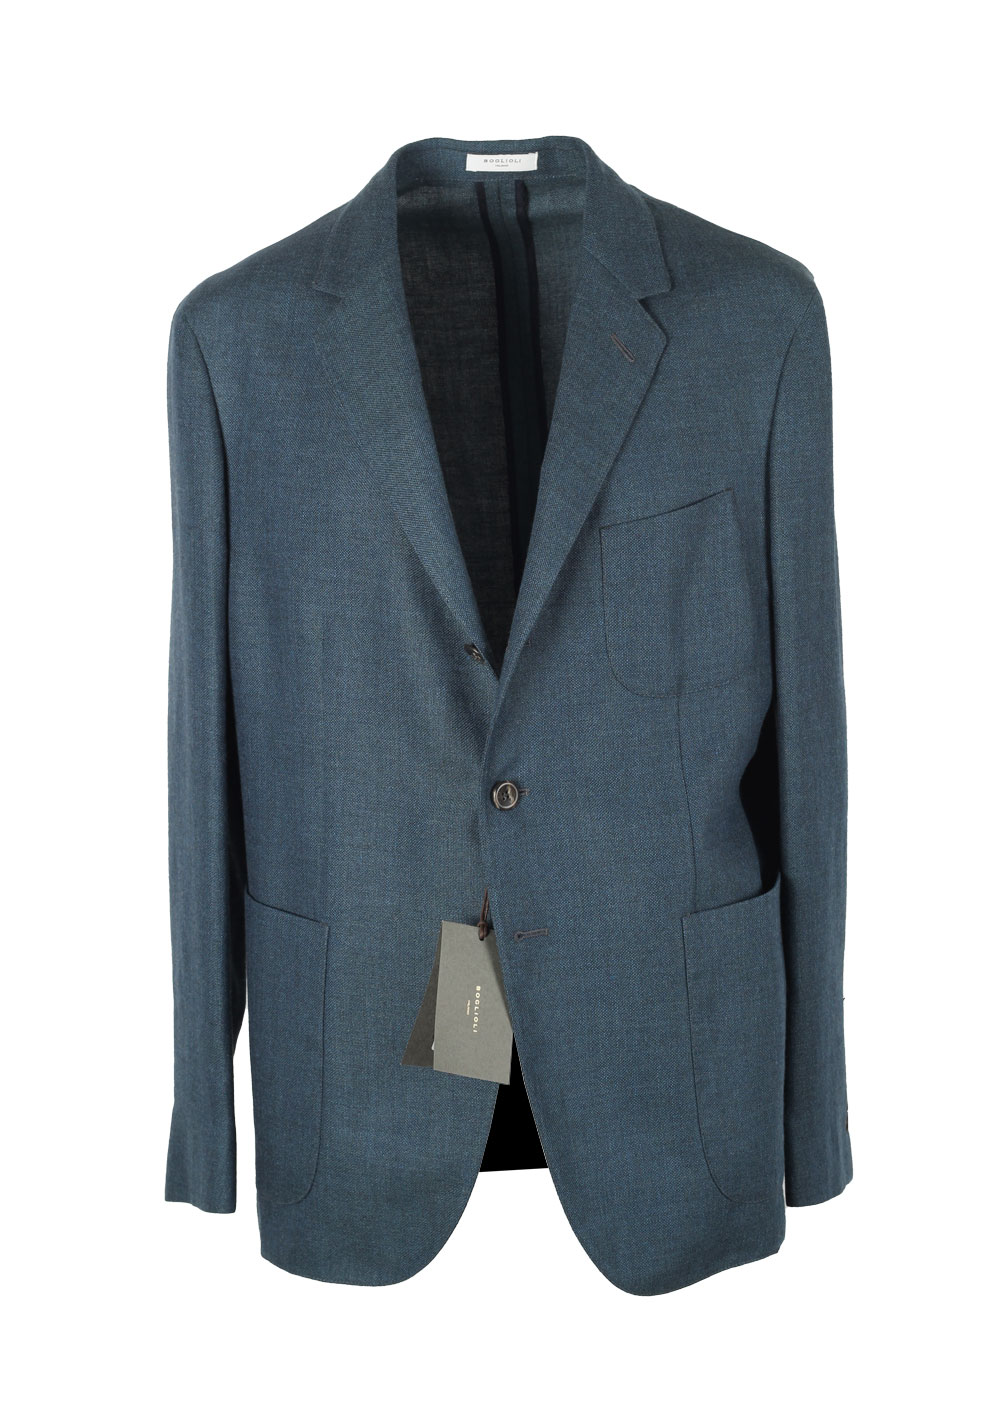 Boglioli K Jacket Teal Sport Coat Size 52 / 42R U.S. | Costume Limité